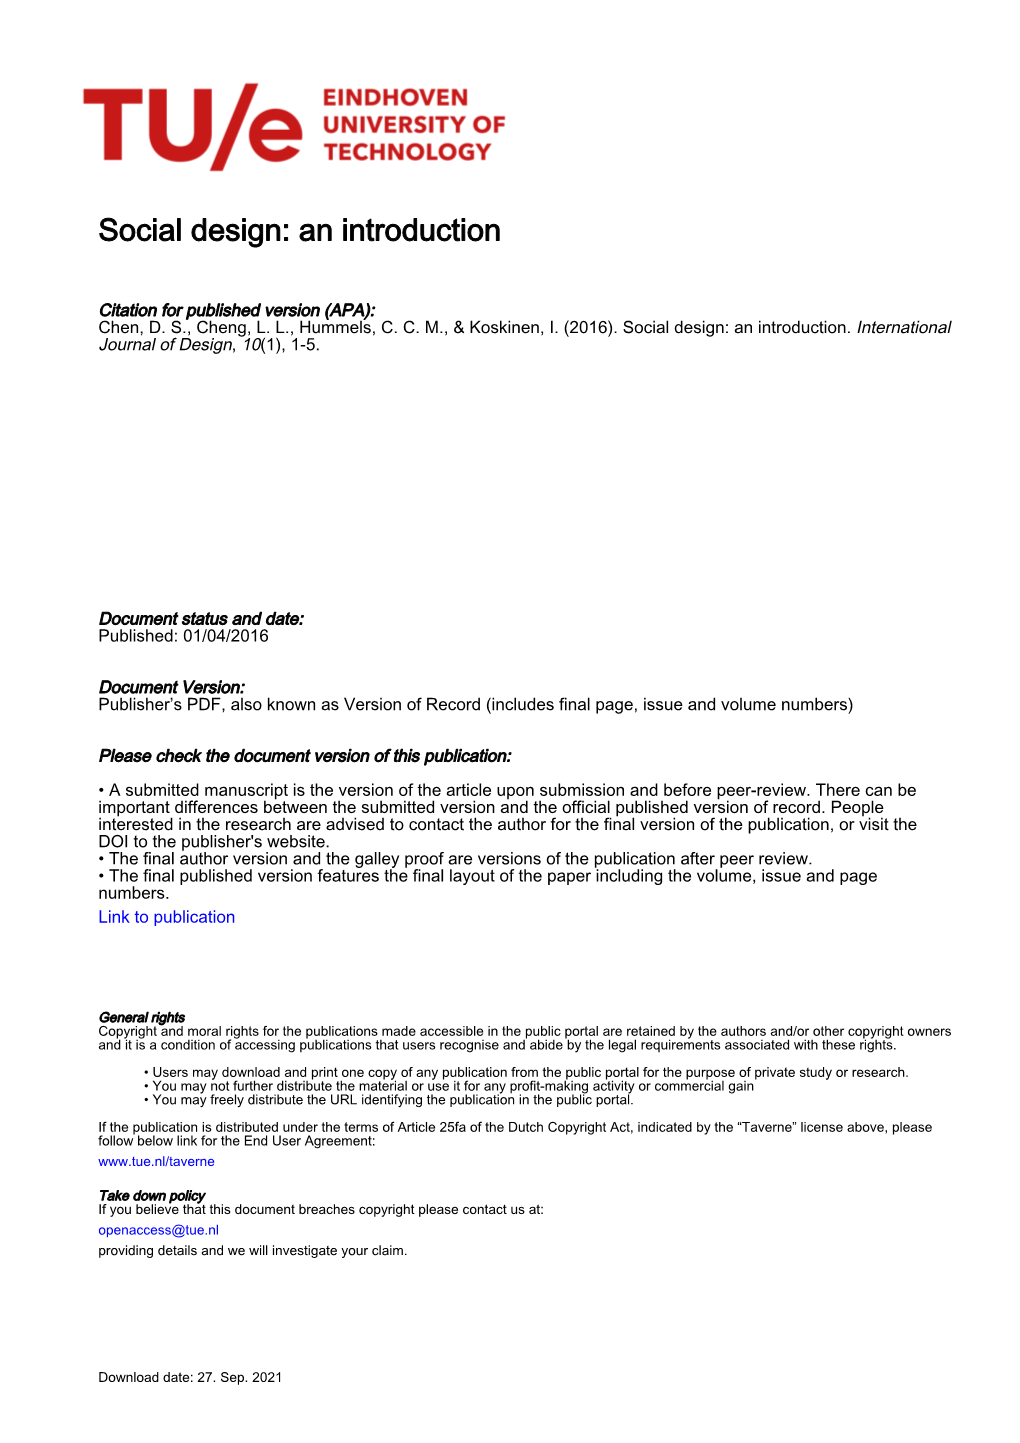 Social Design: an Introduction